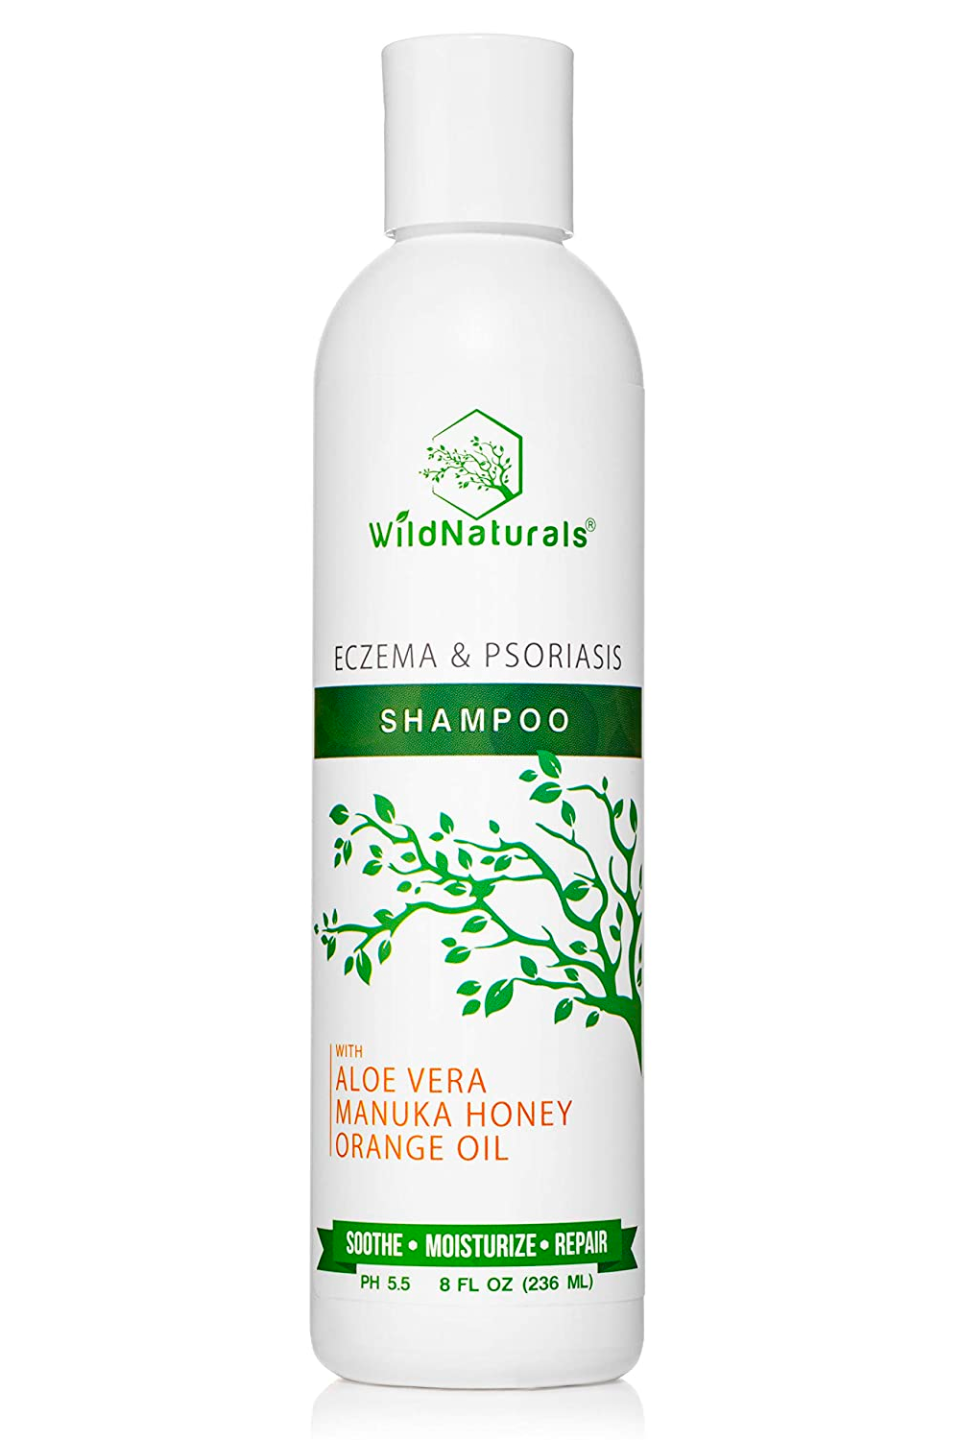 7) Wild Naturals Eczema and Psoriasis Shampoo